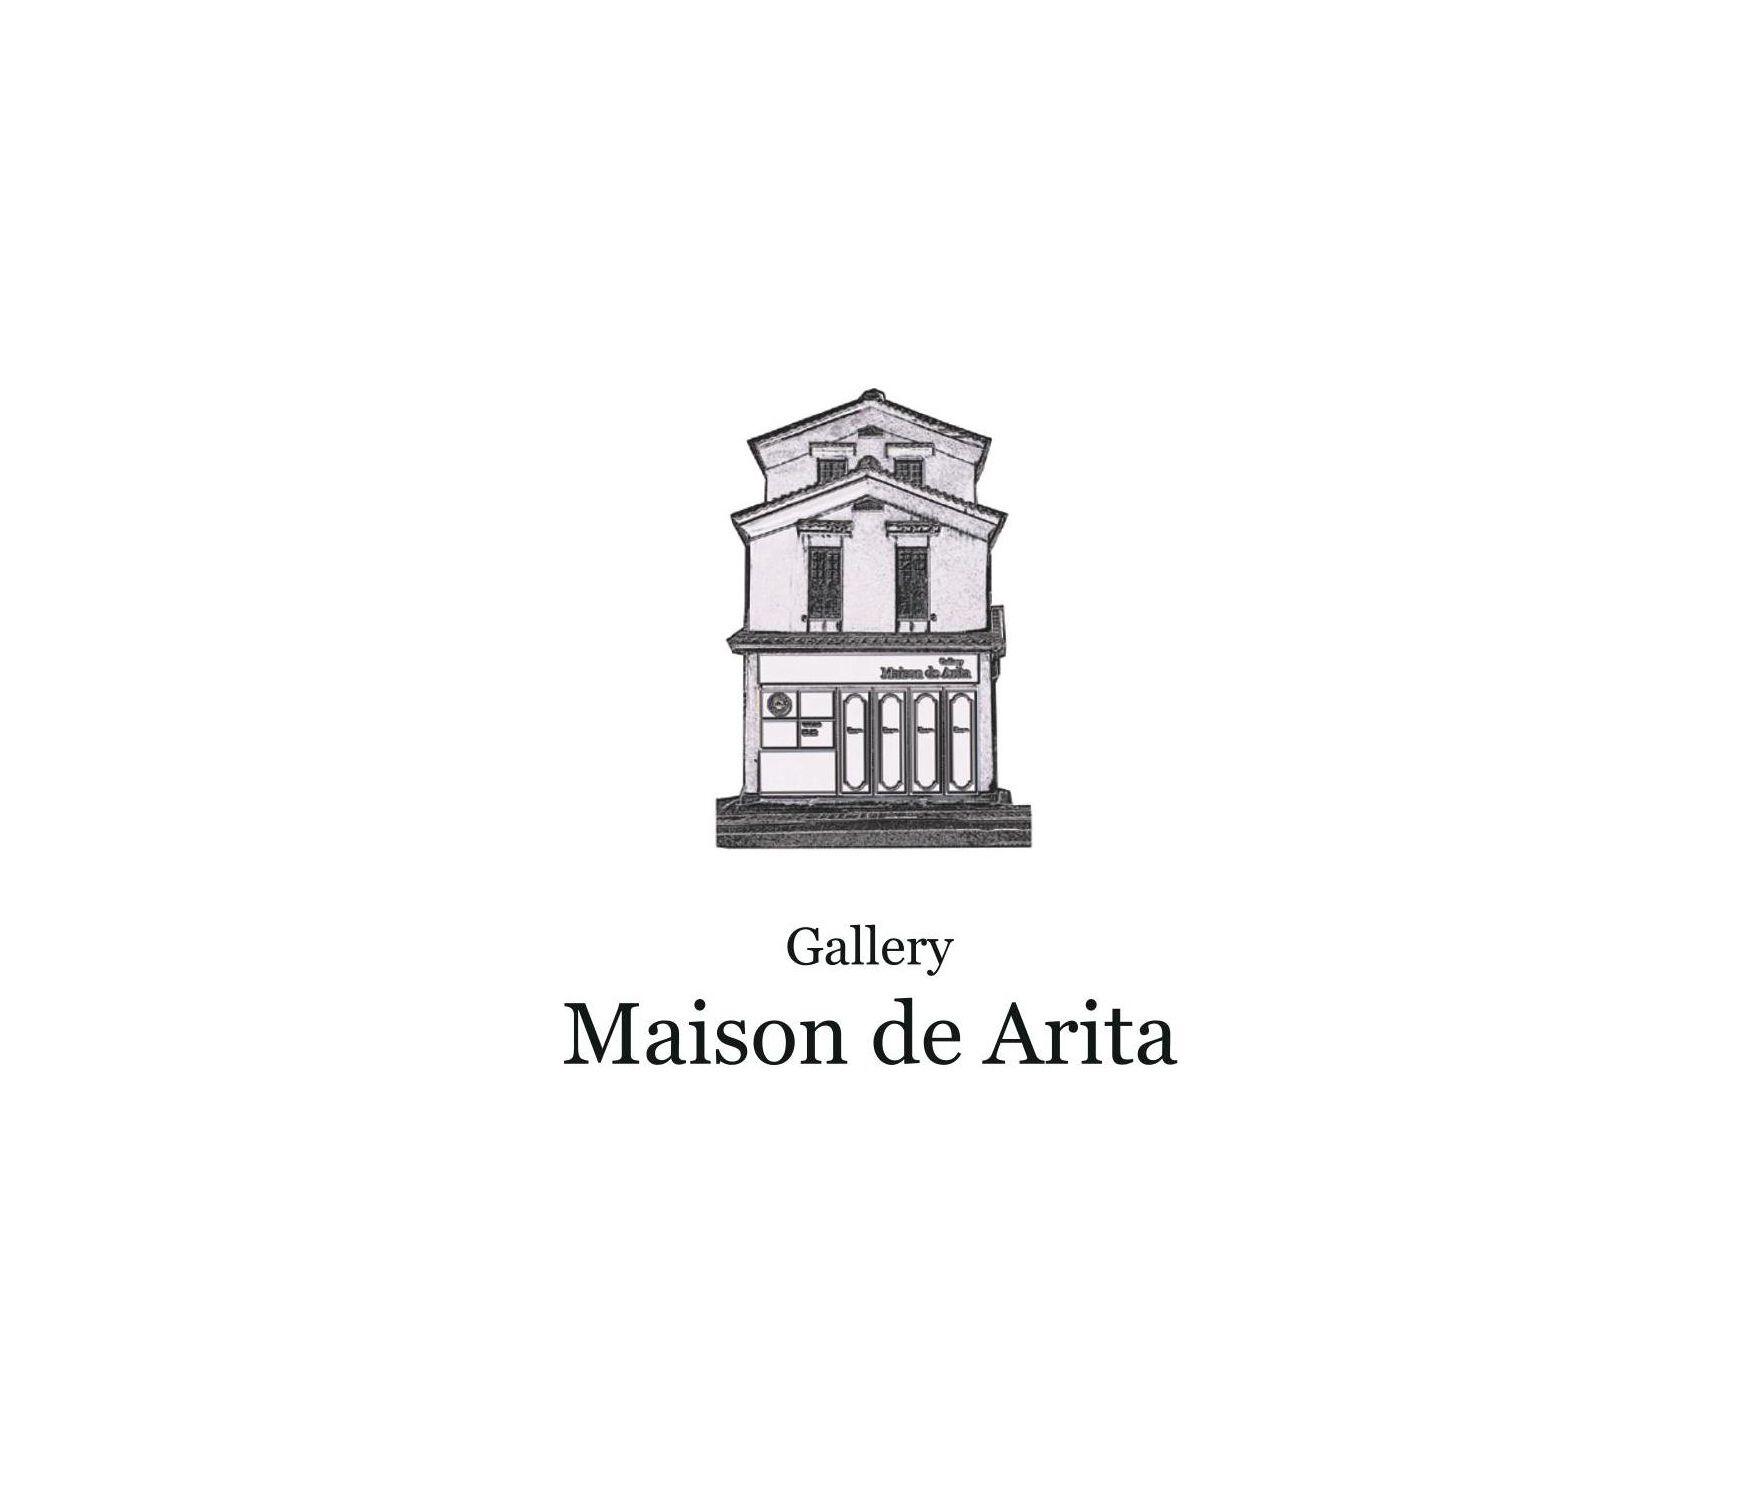 Gallery Maison de Arita